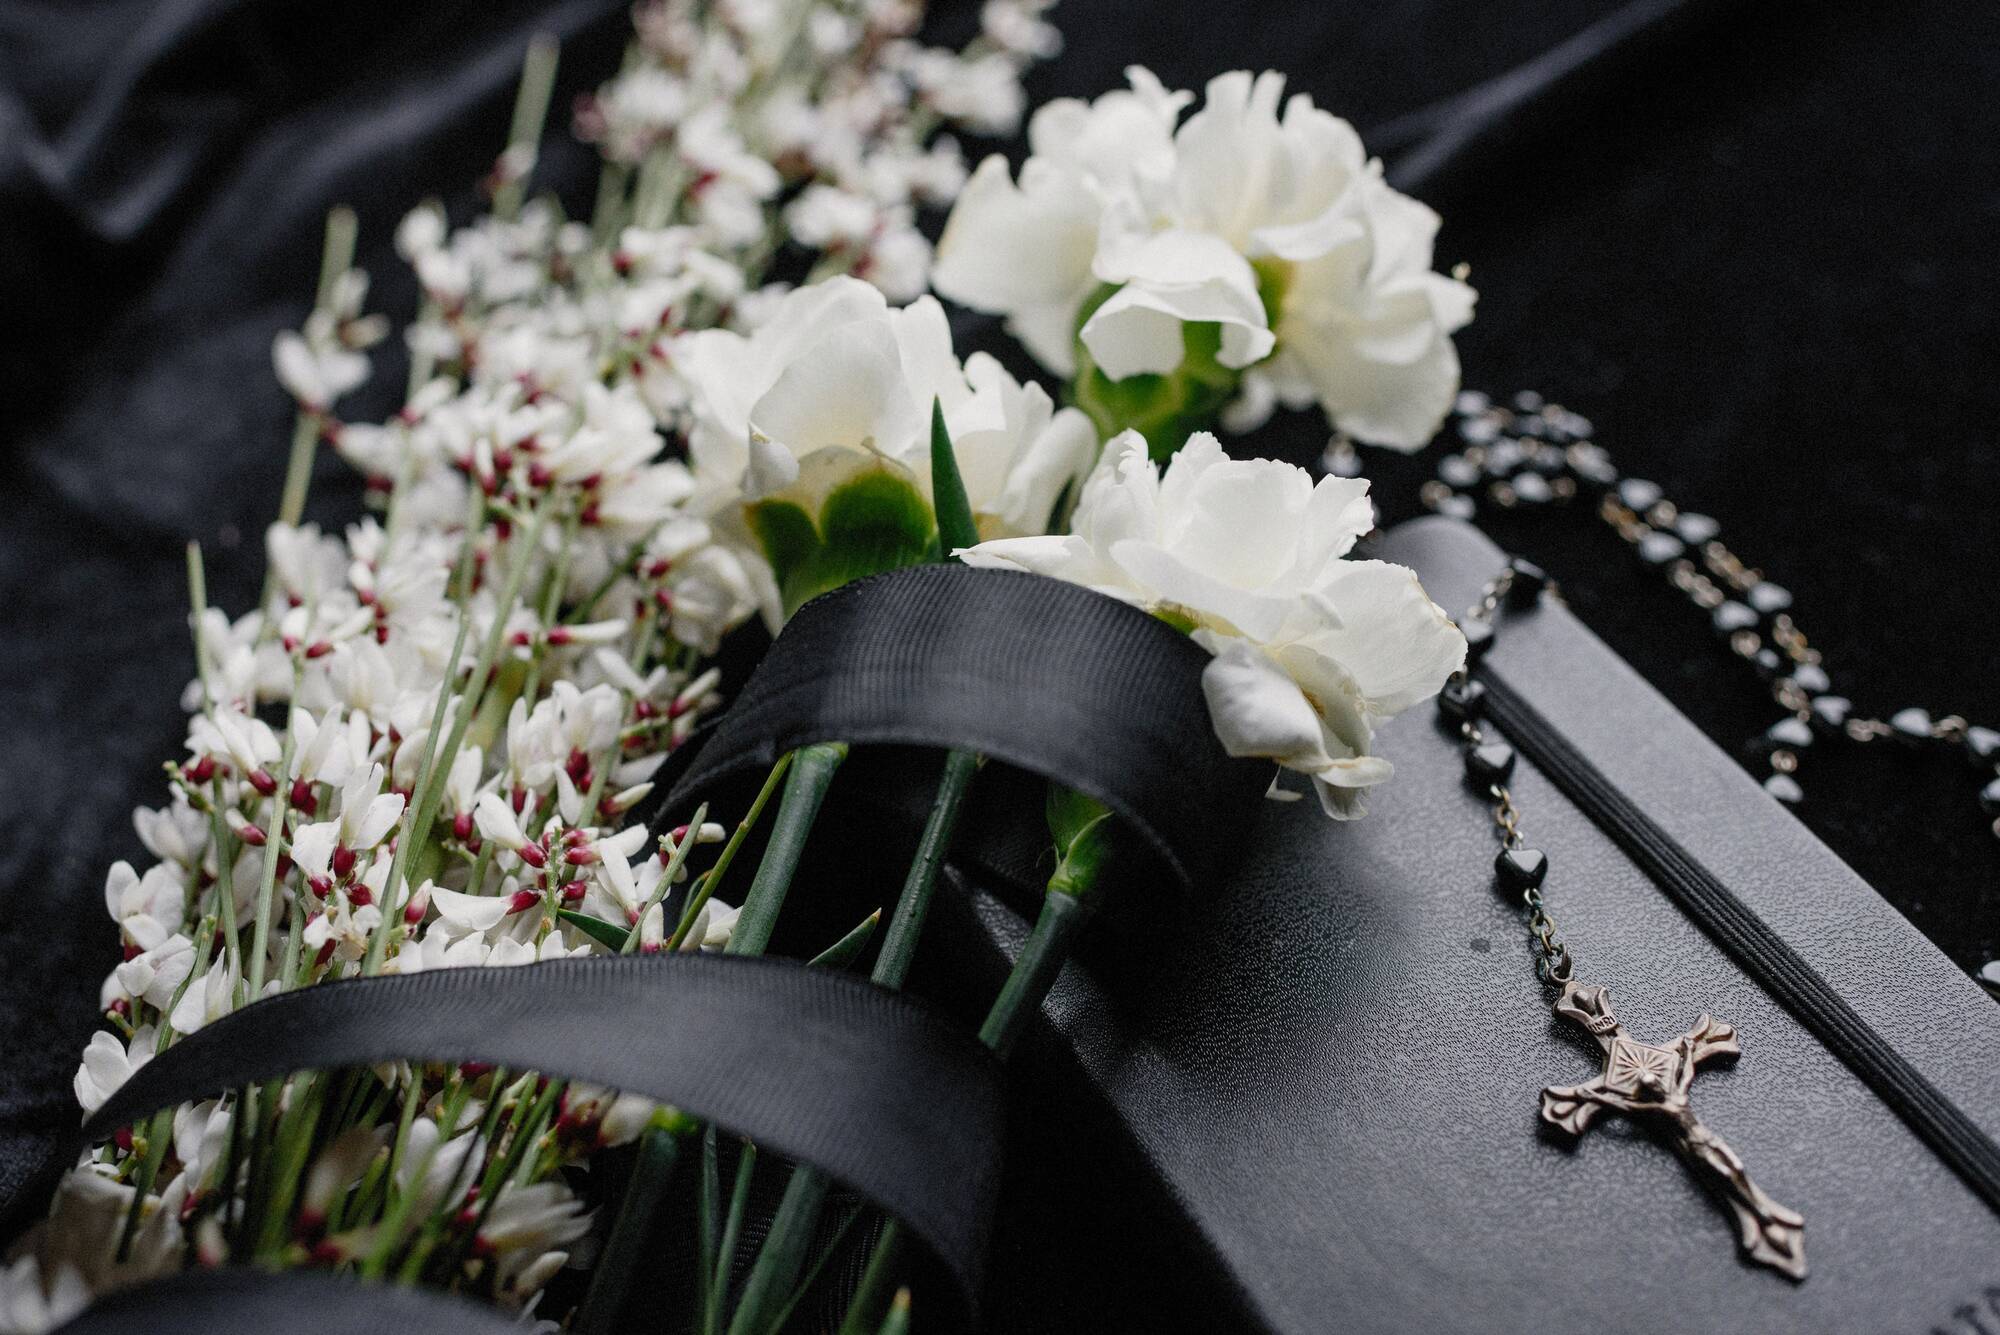 Funeral Flower